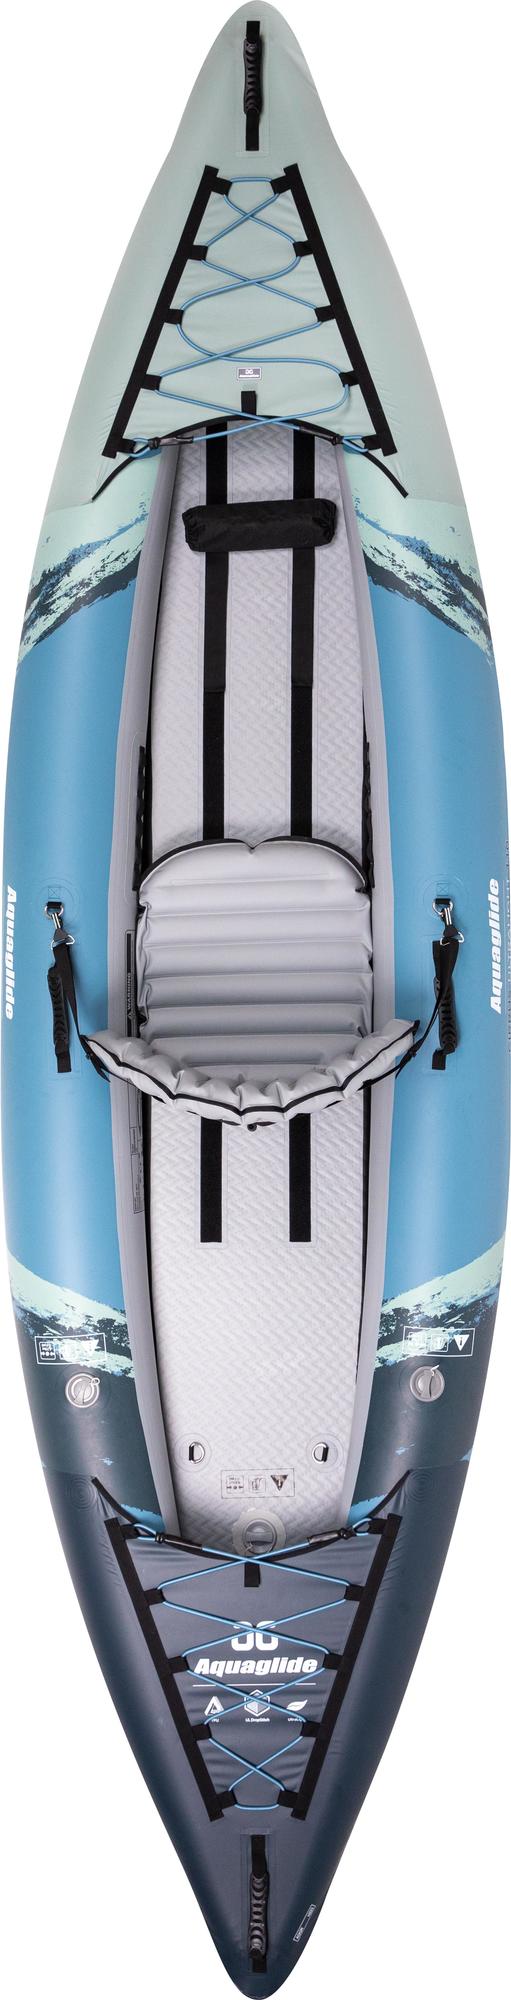 AquaGlide Inflatable Kayak Proformance Seat